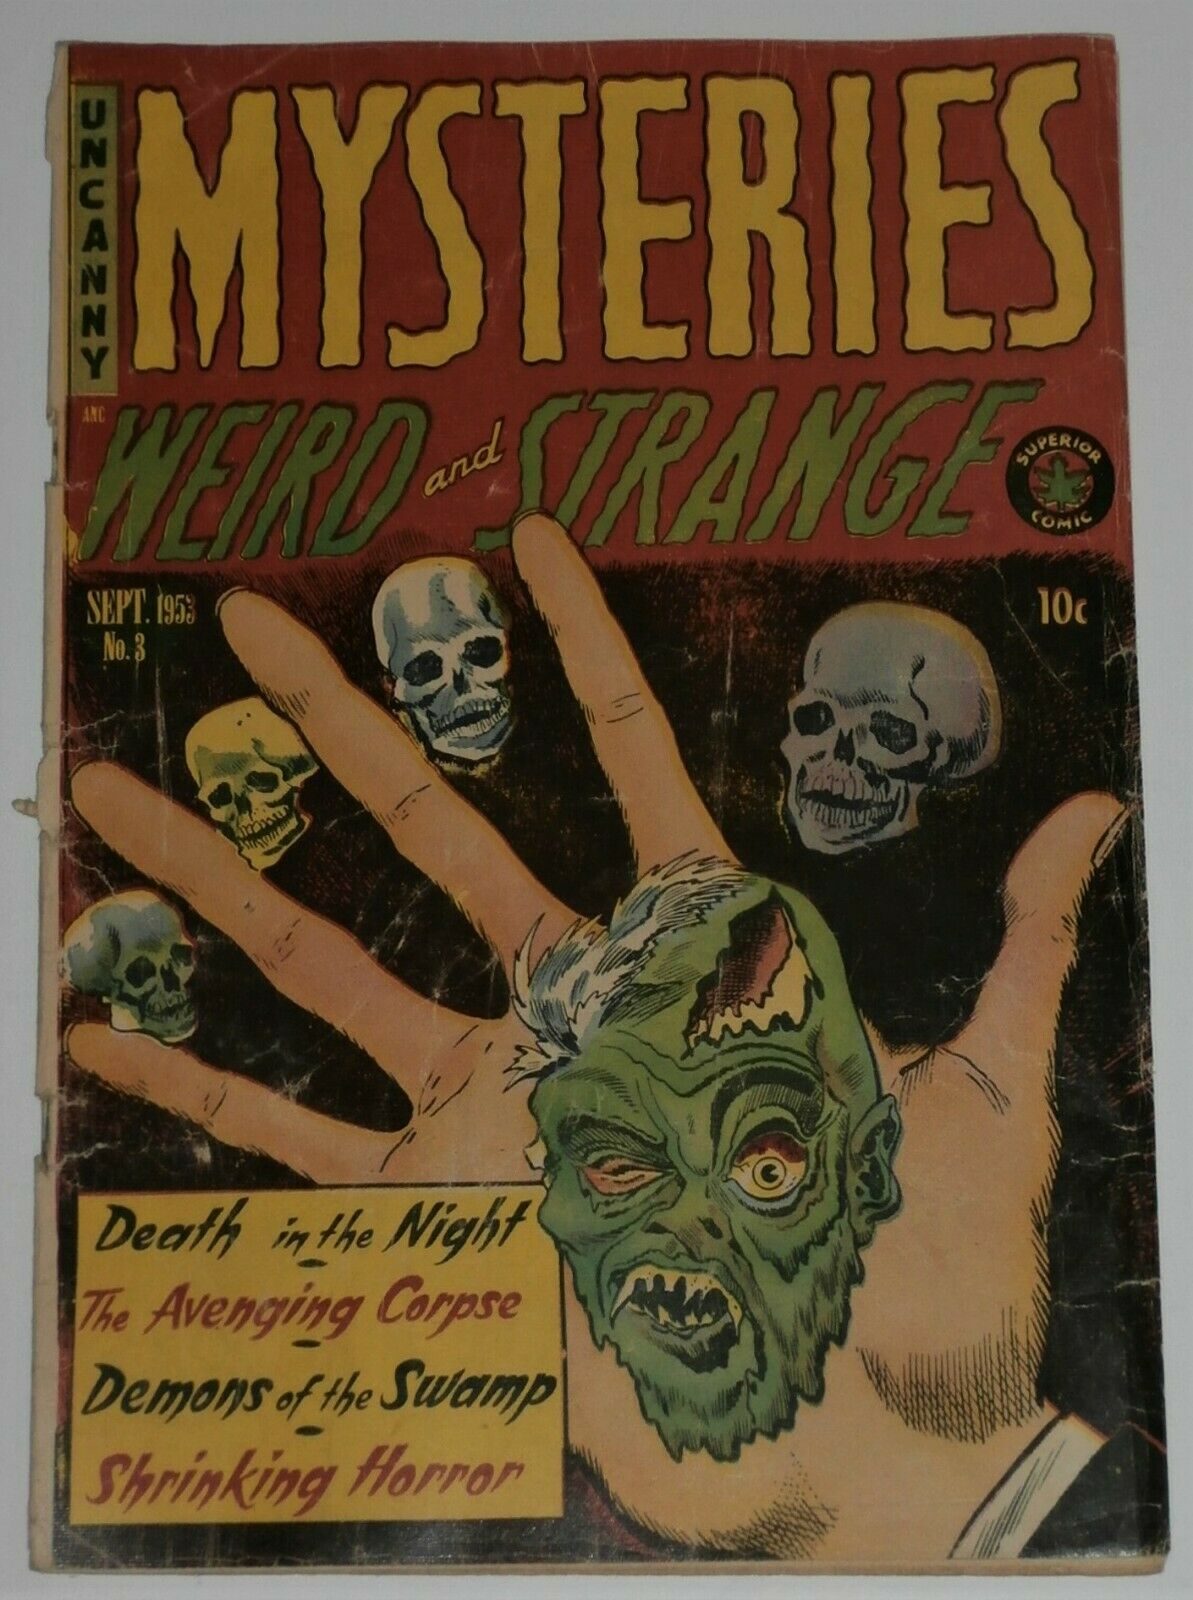 Mysteries Weird and Strange #3..Skulls at Hand..September,1953…